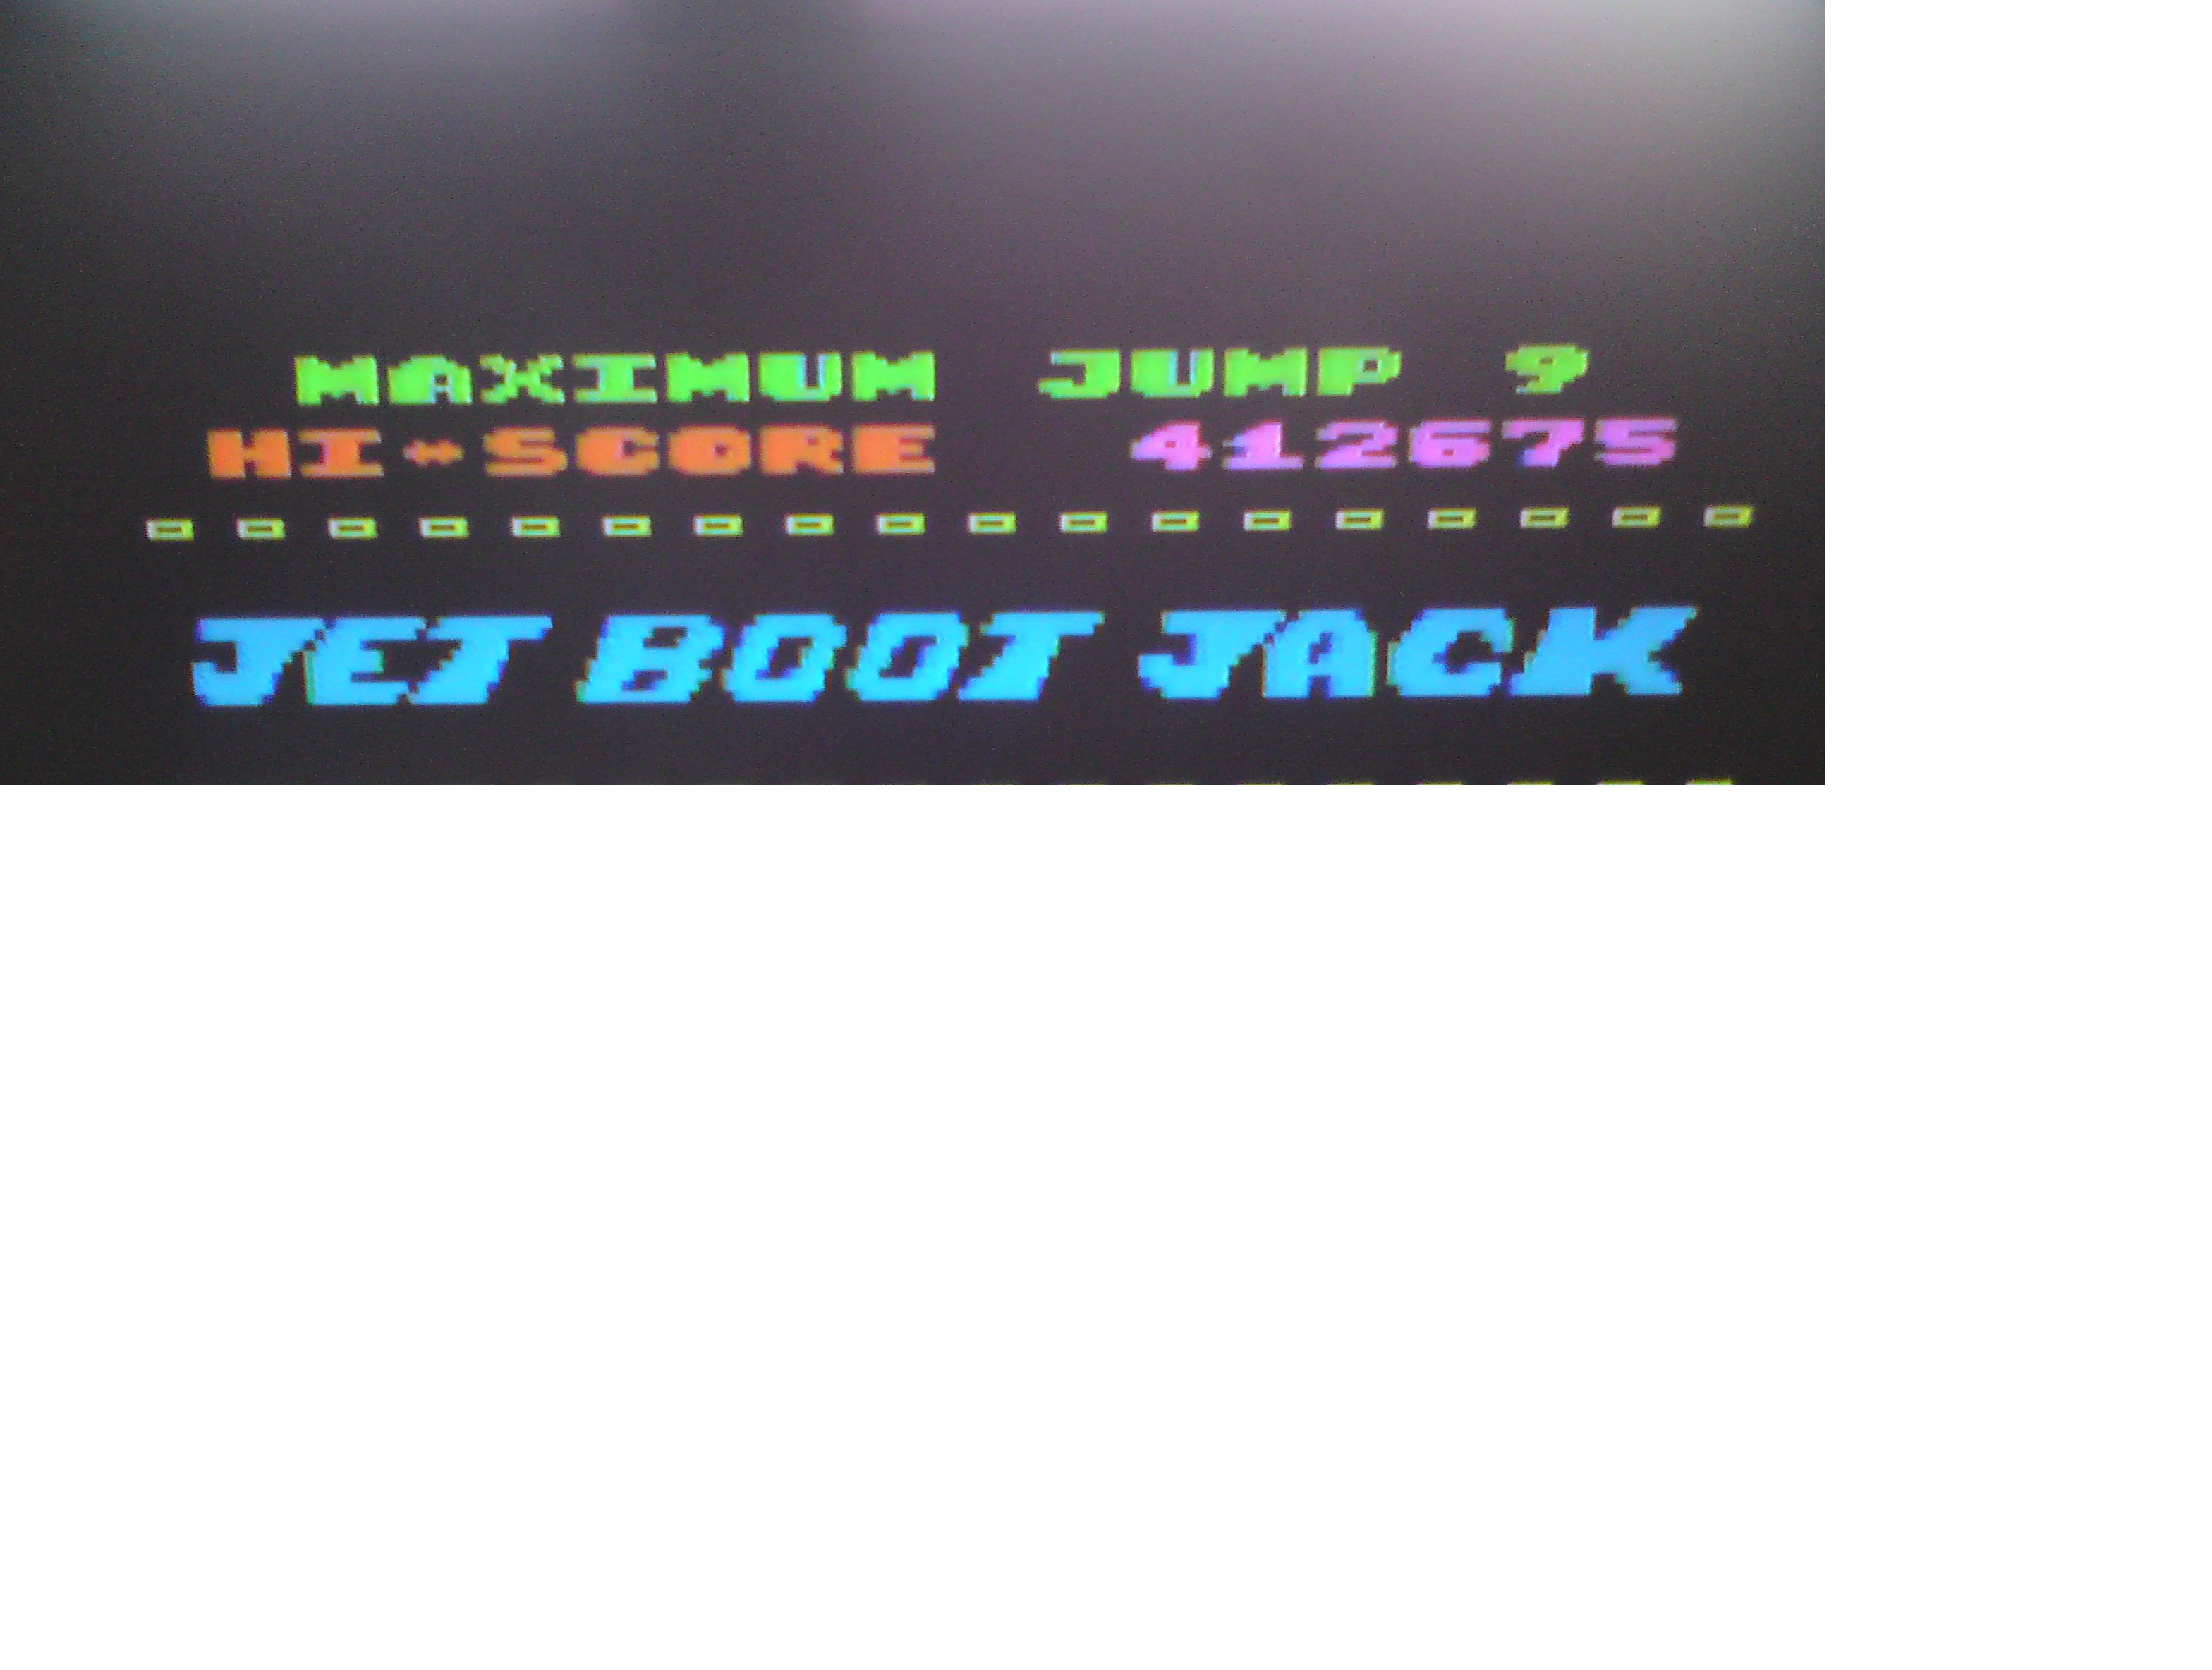 Jet boot  Jack 412,675 points